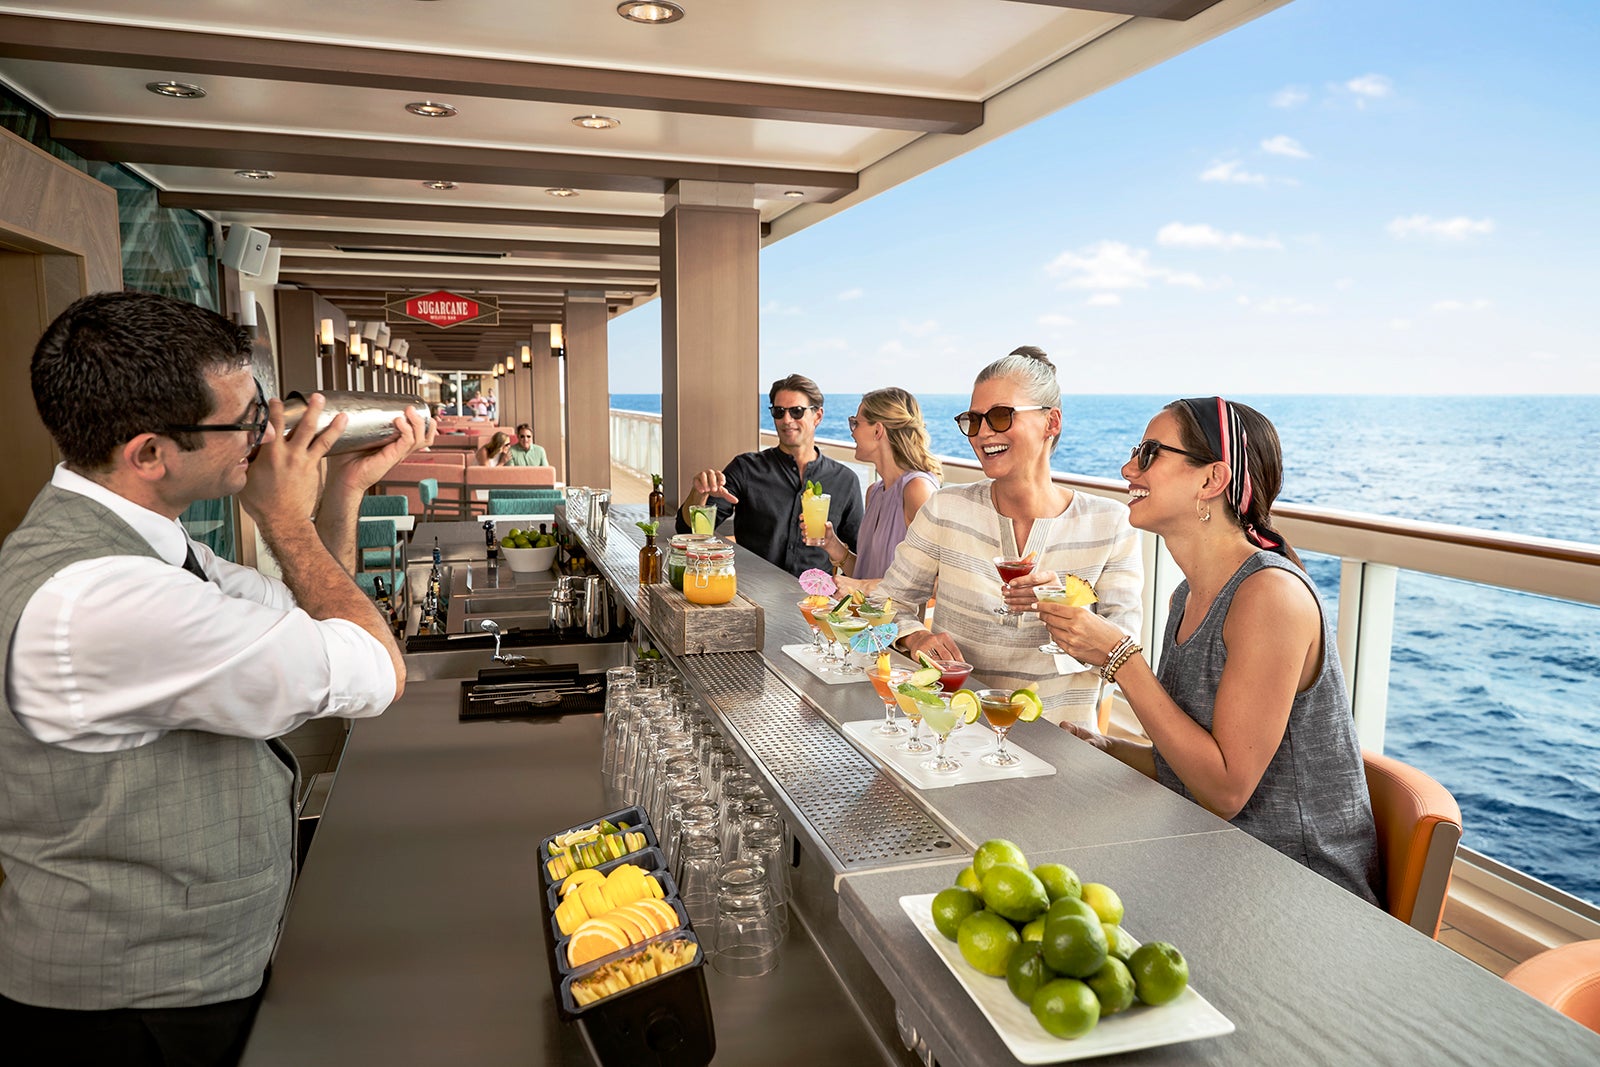 people sitting at an open-air cruise ship bar enjoying mojitos while a bartender mixes a drink